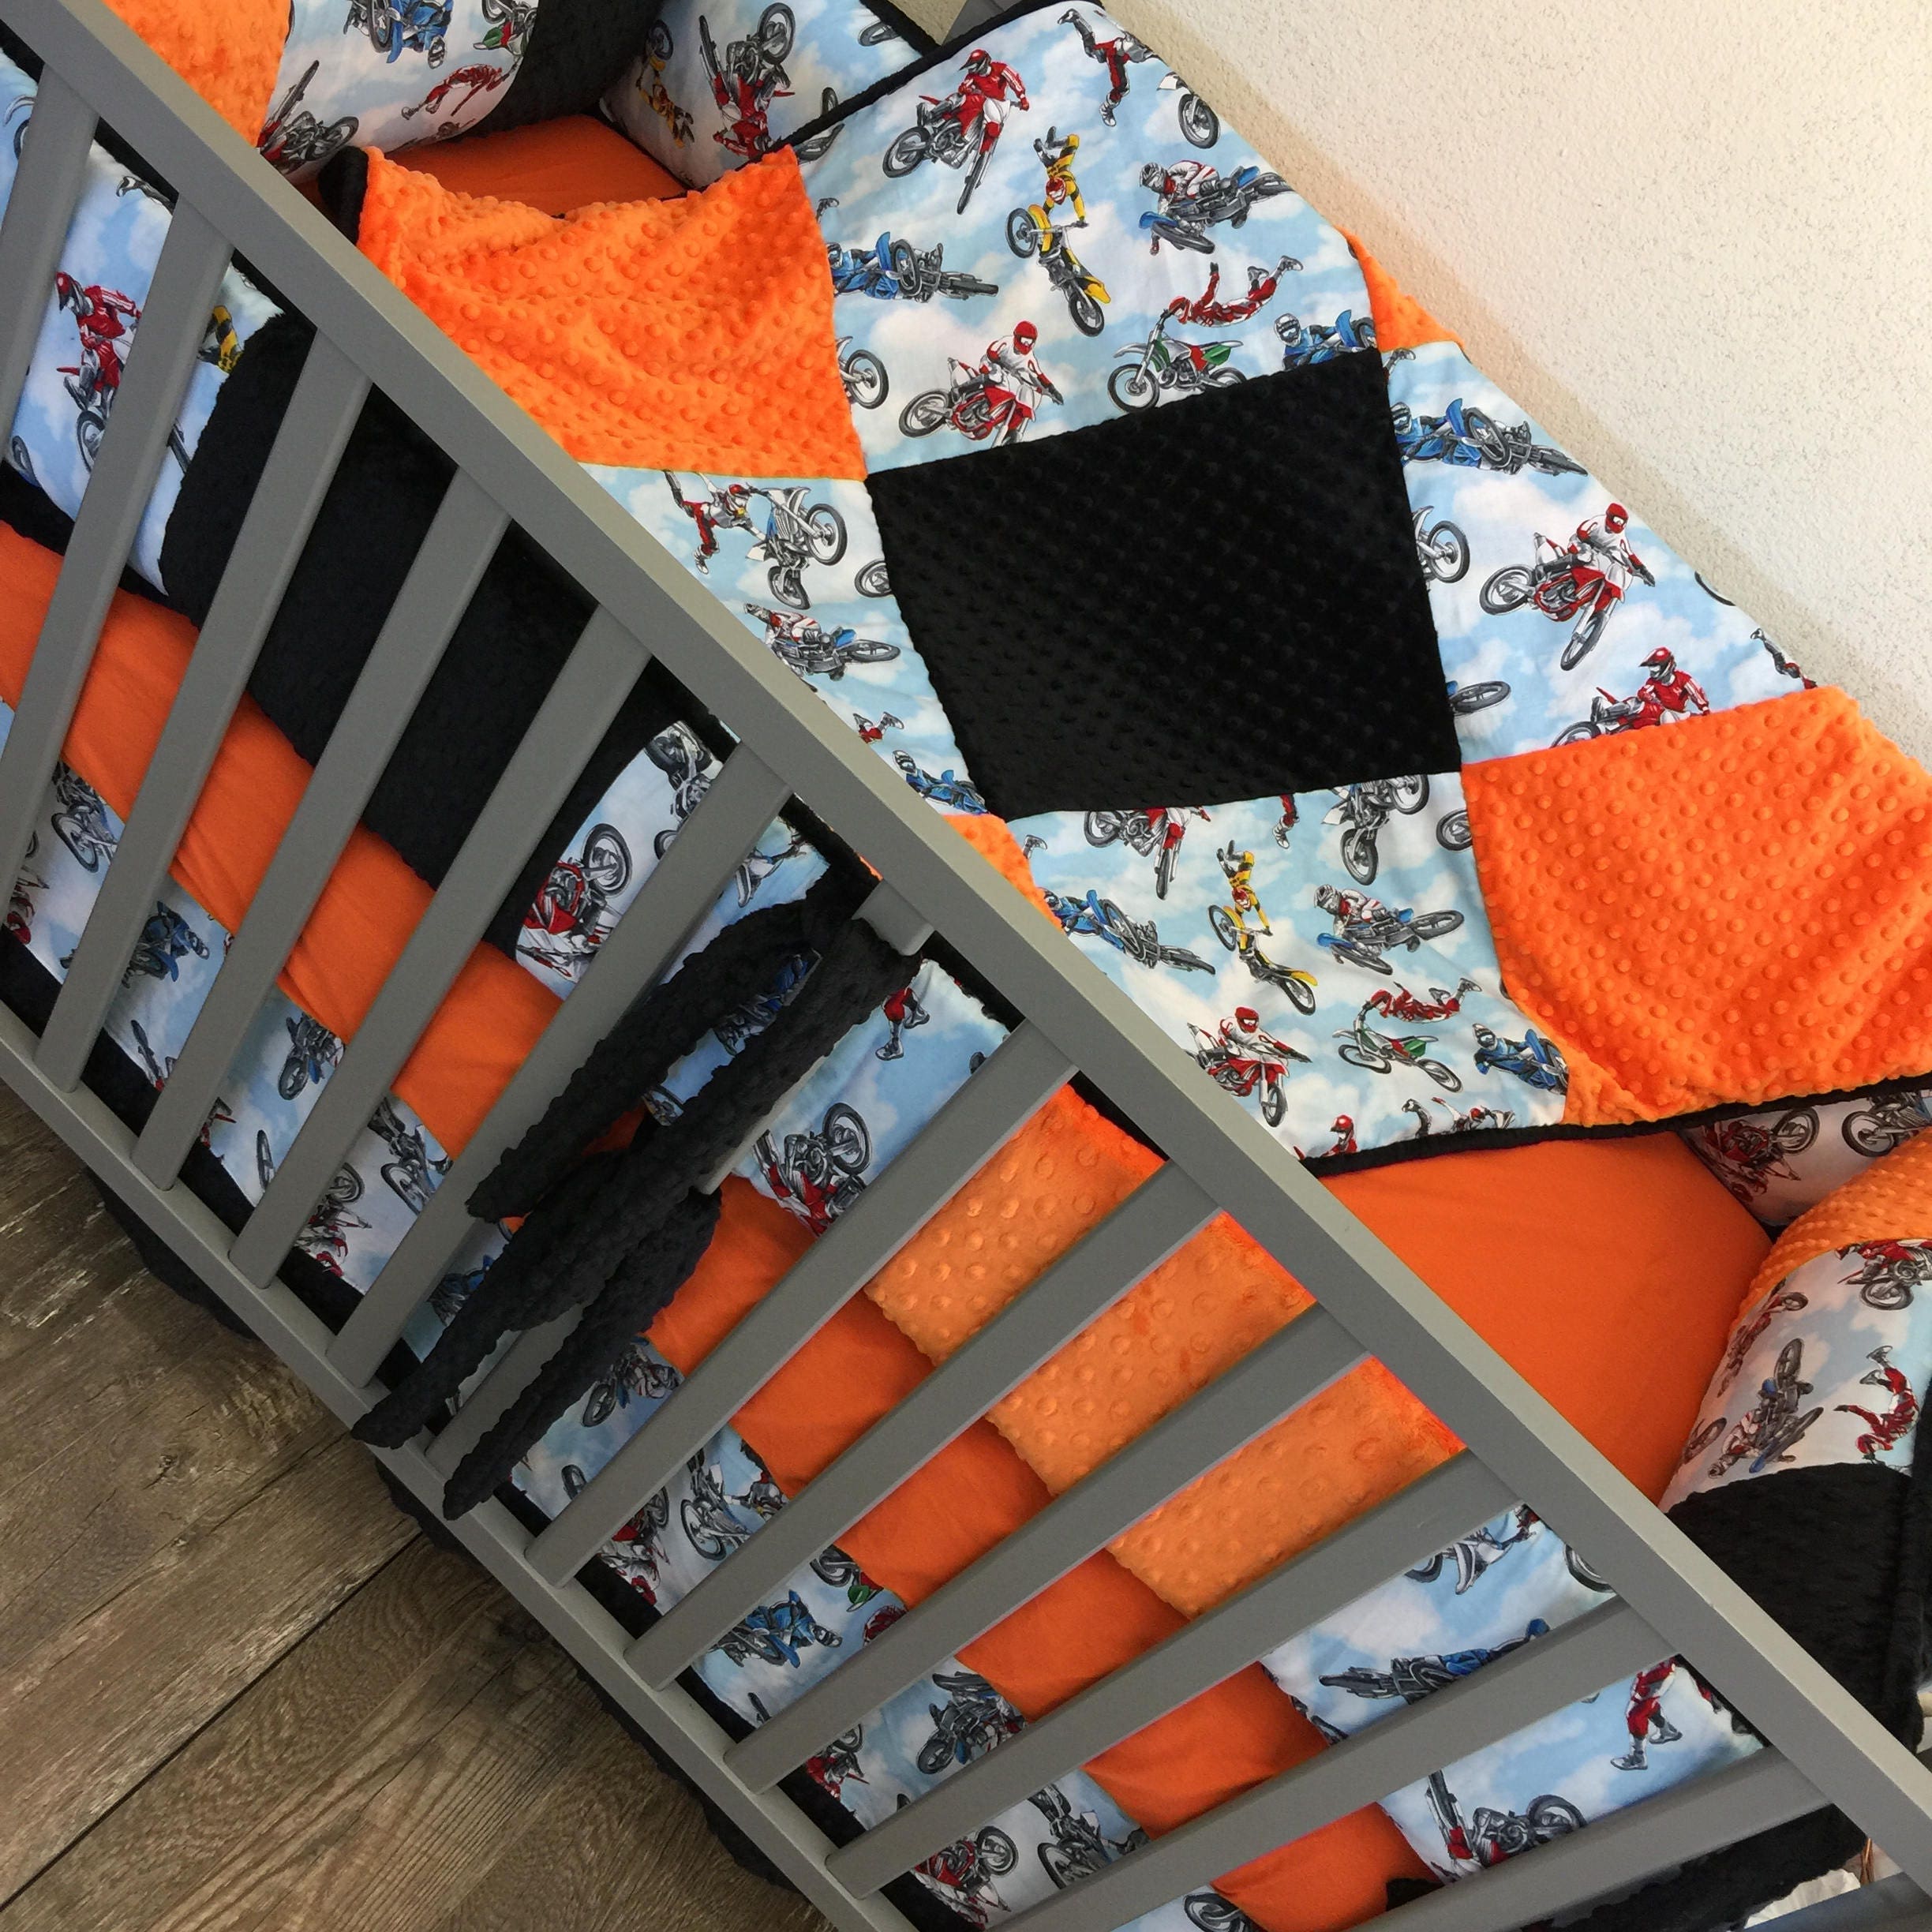 motocross crib bedding set